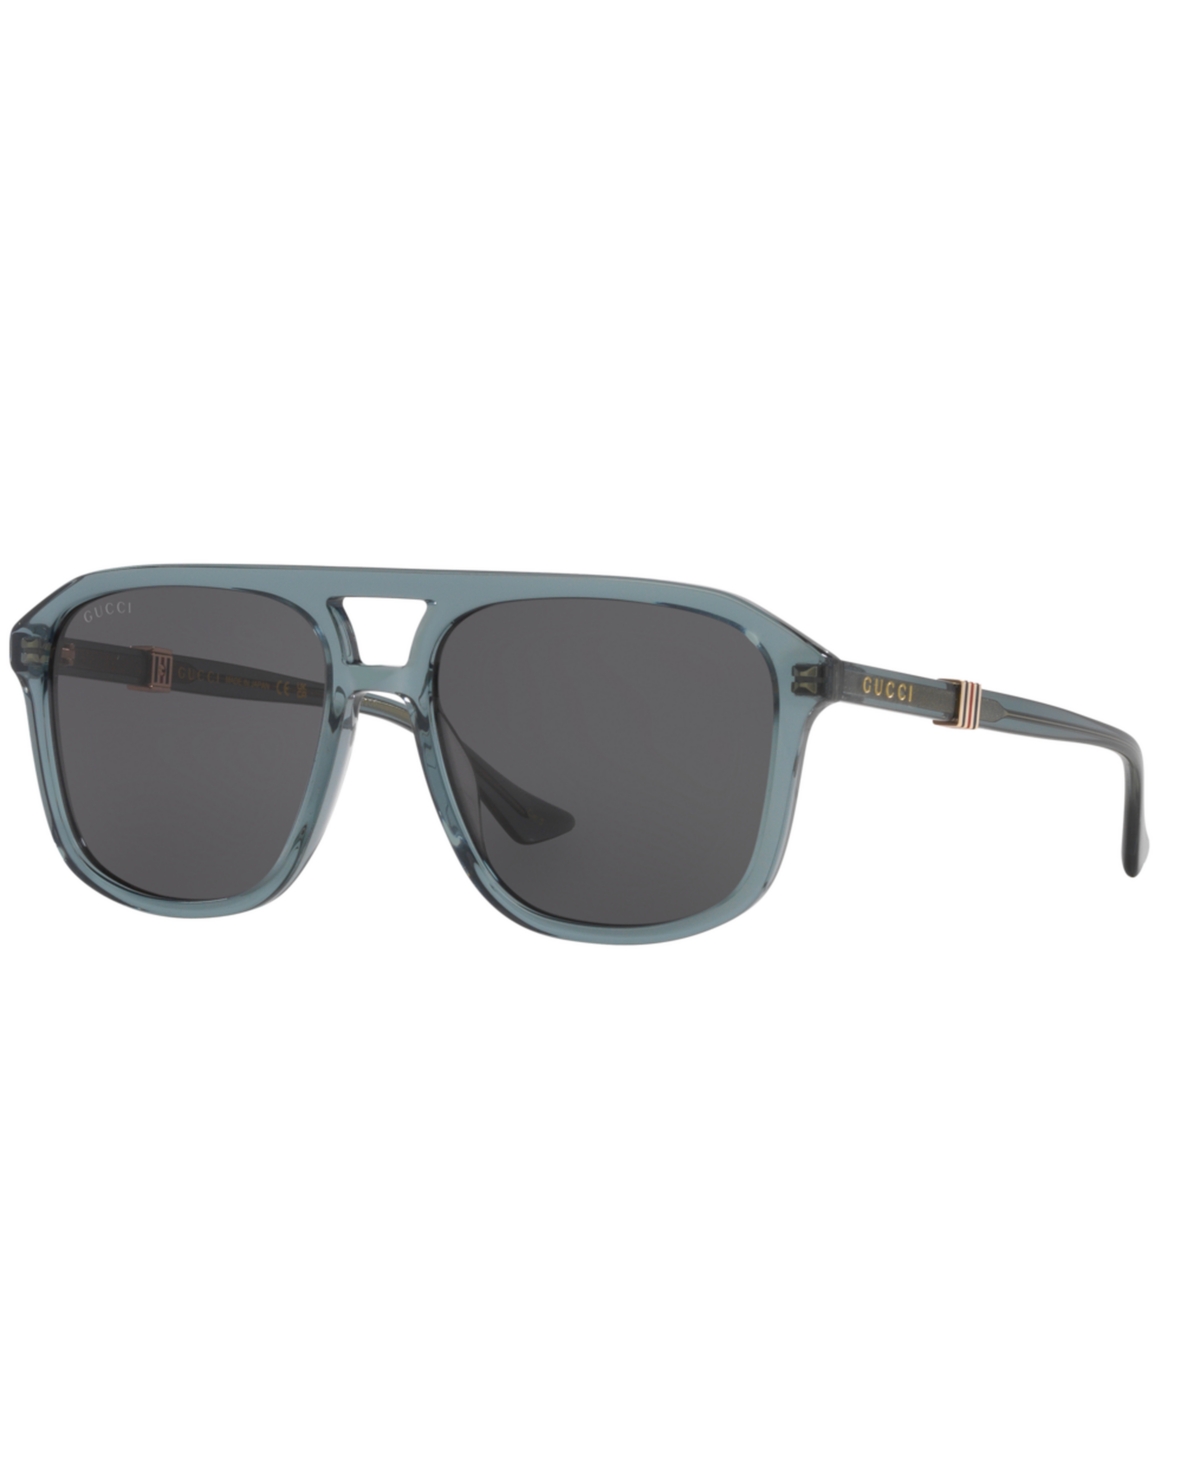 Women's Sunglasses, JC4003HB - Green